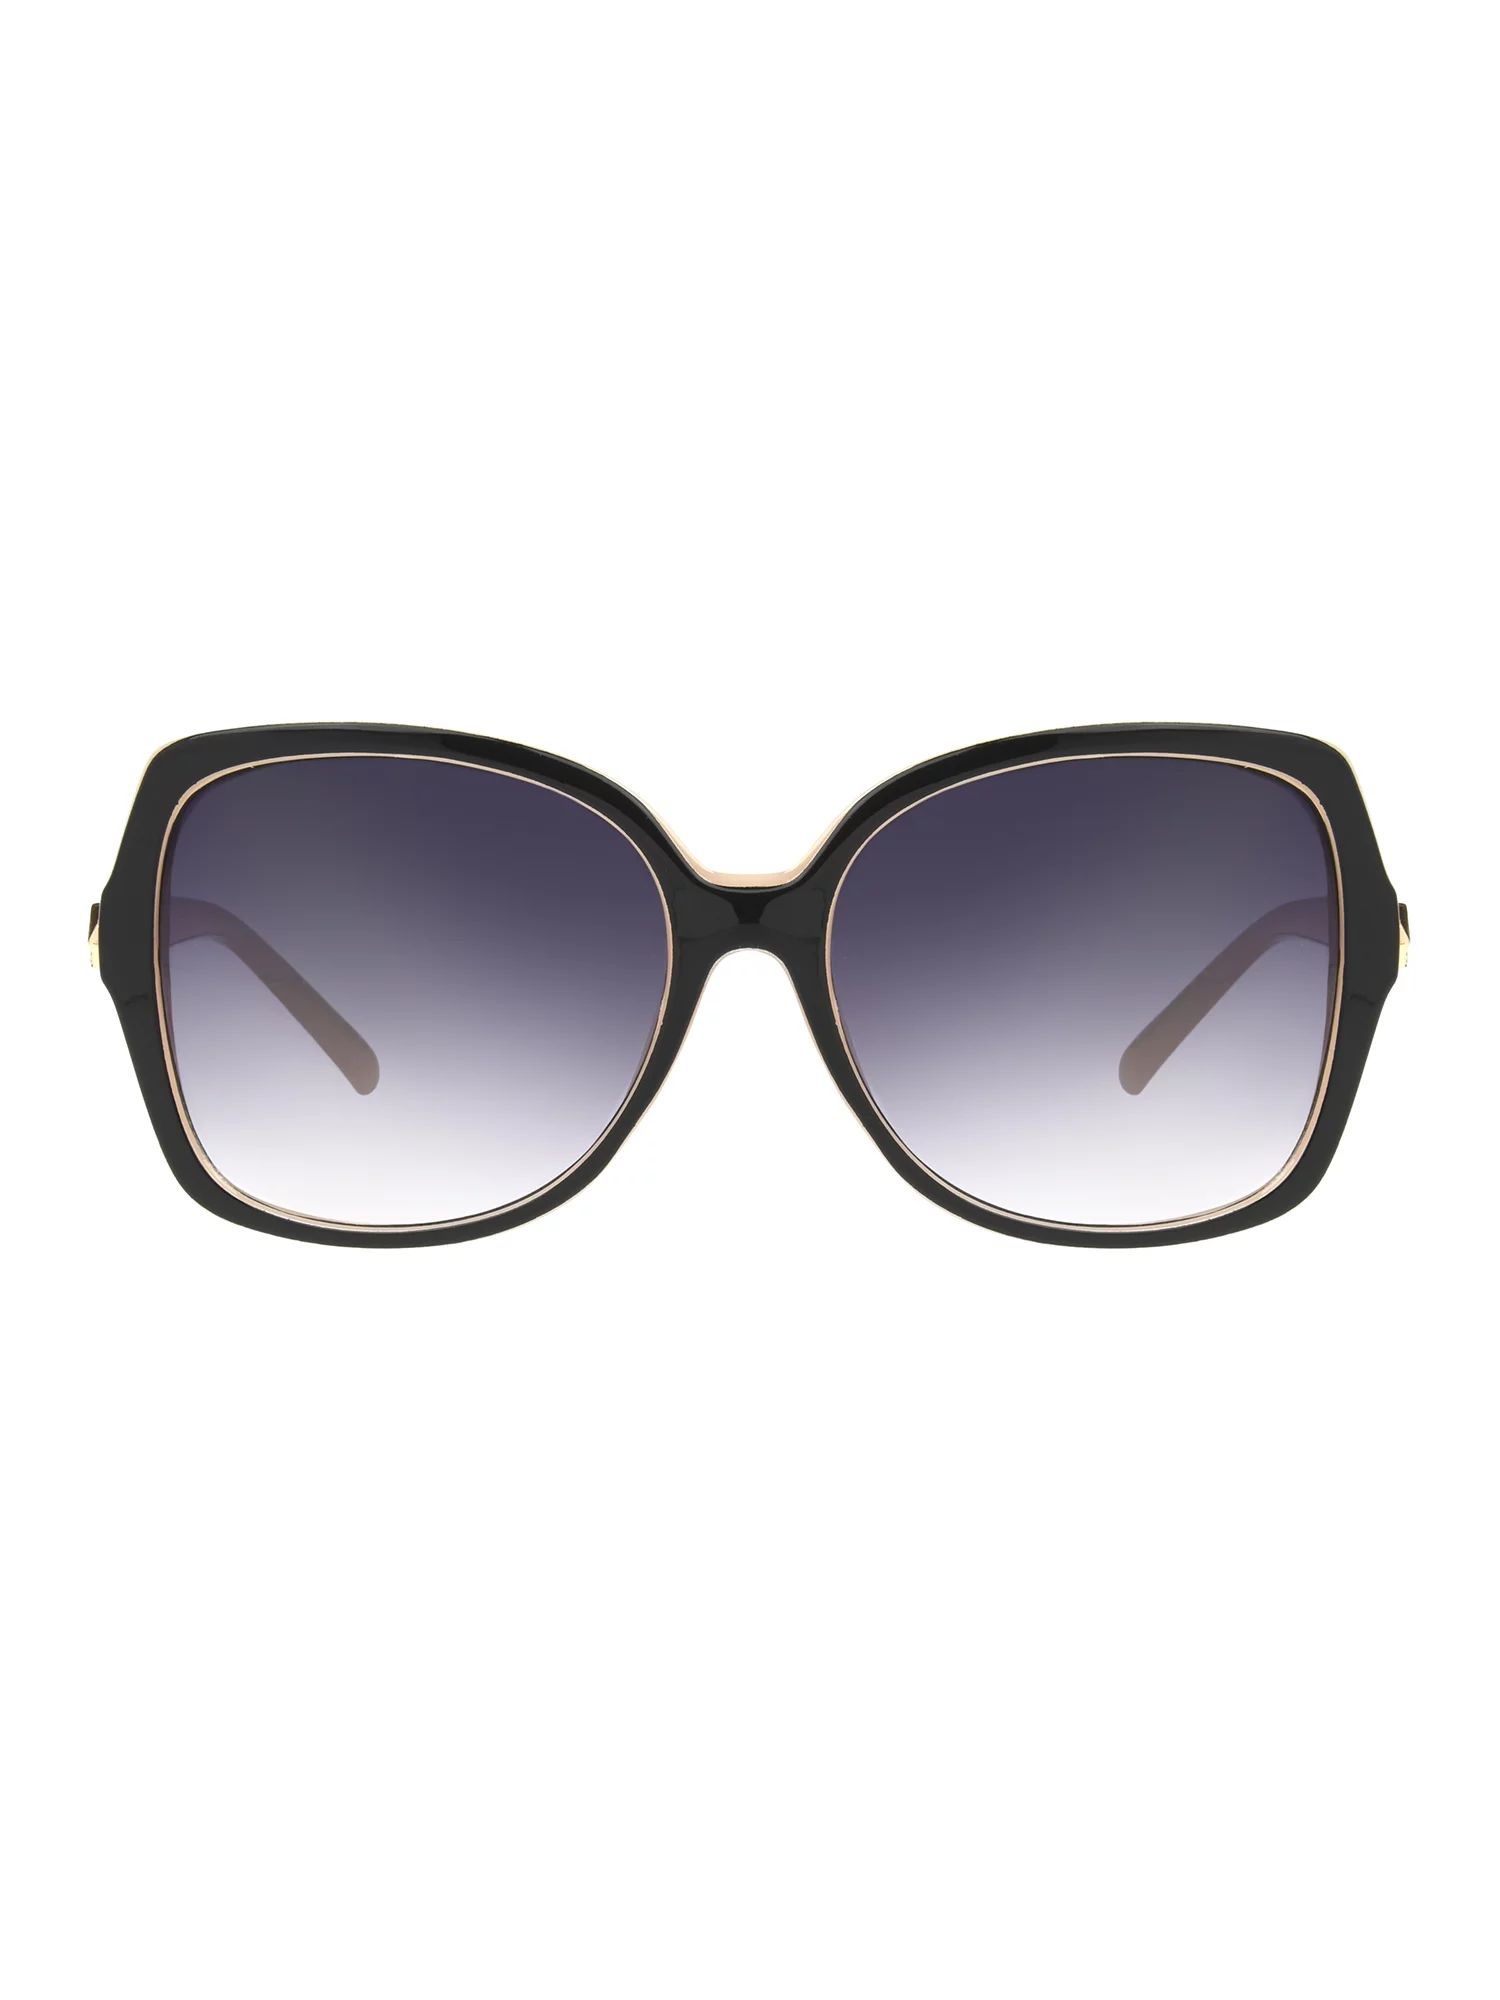 Foster Grant Women's Oversized Fashion Sunglasses, Black Beige | Walmart (US)